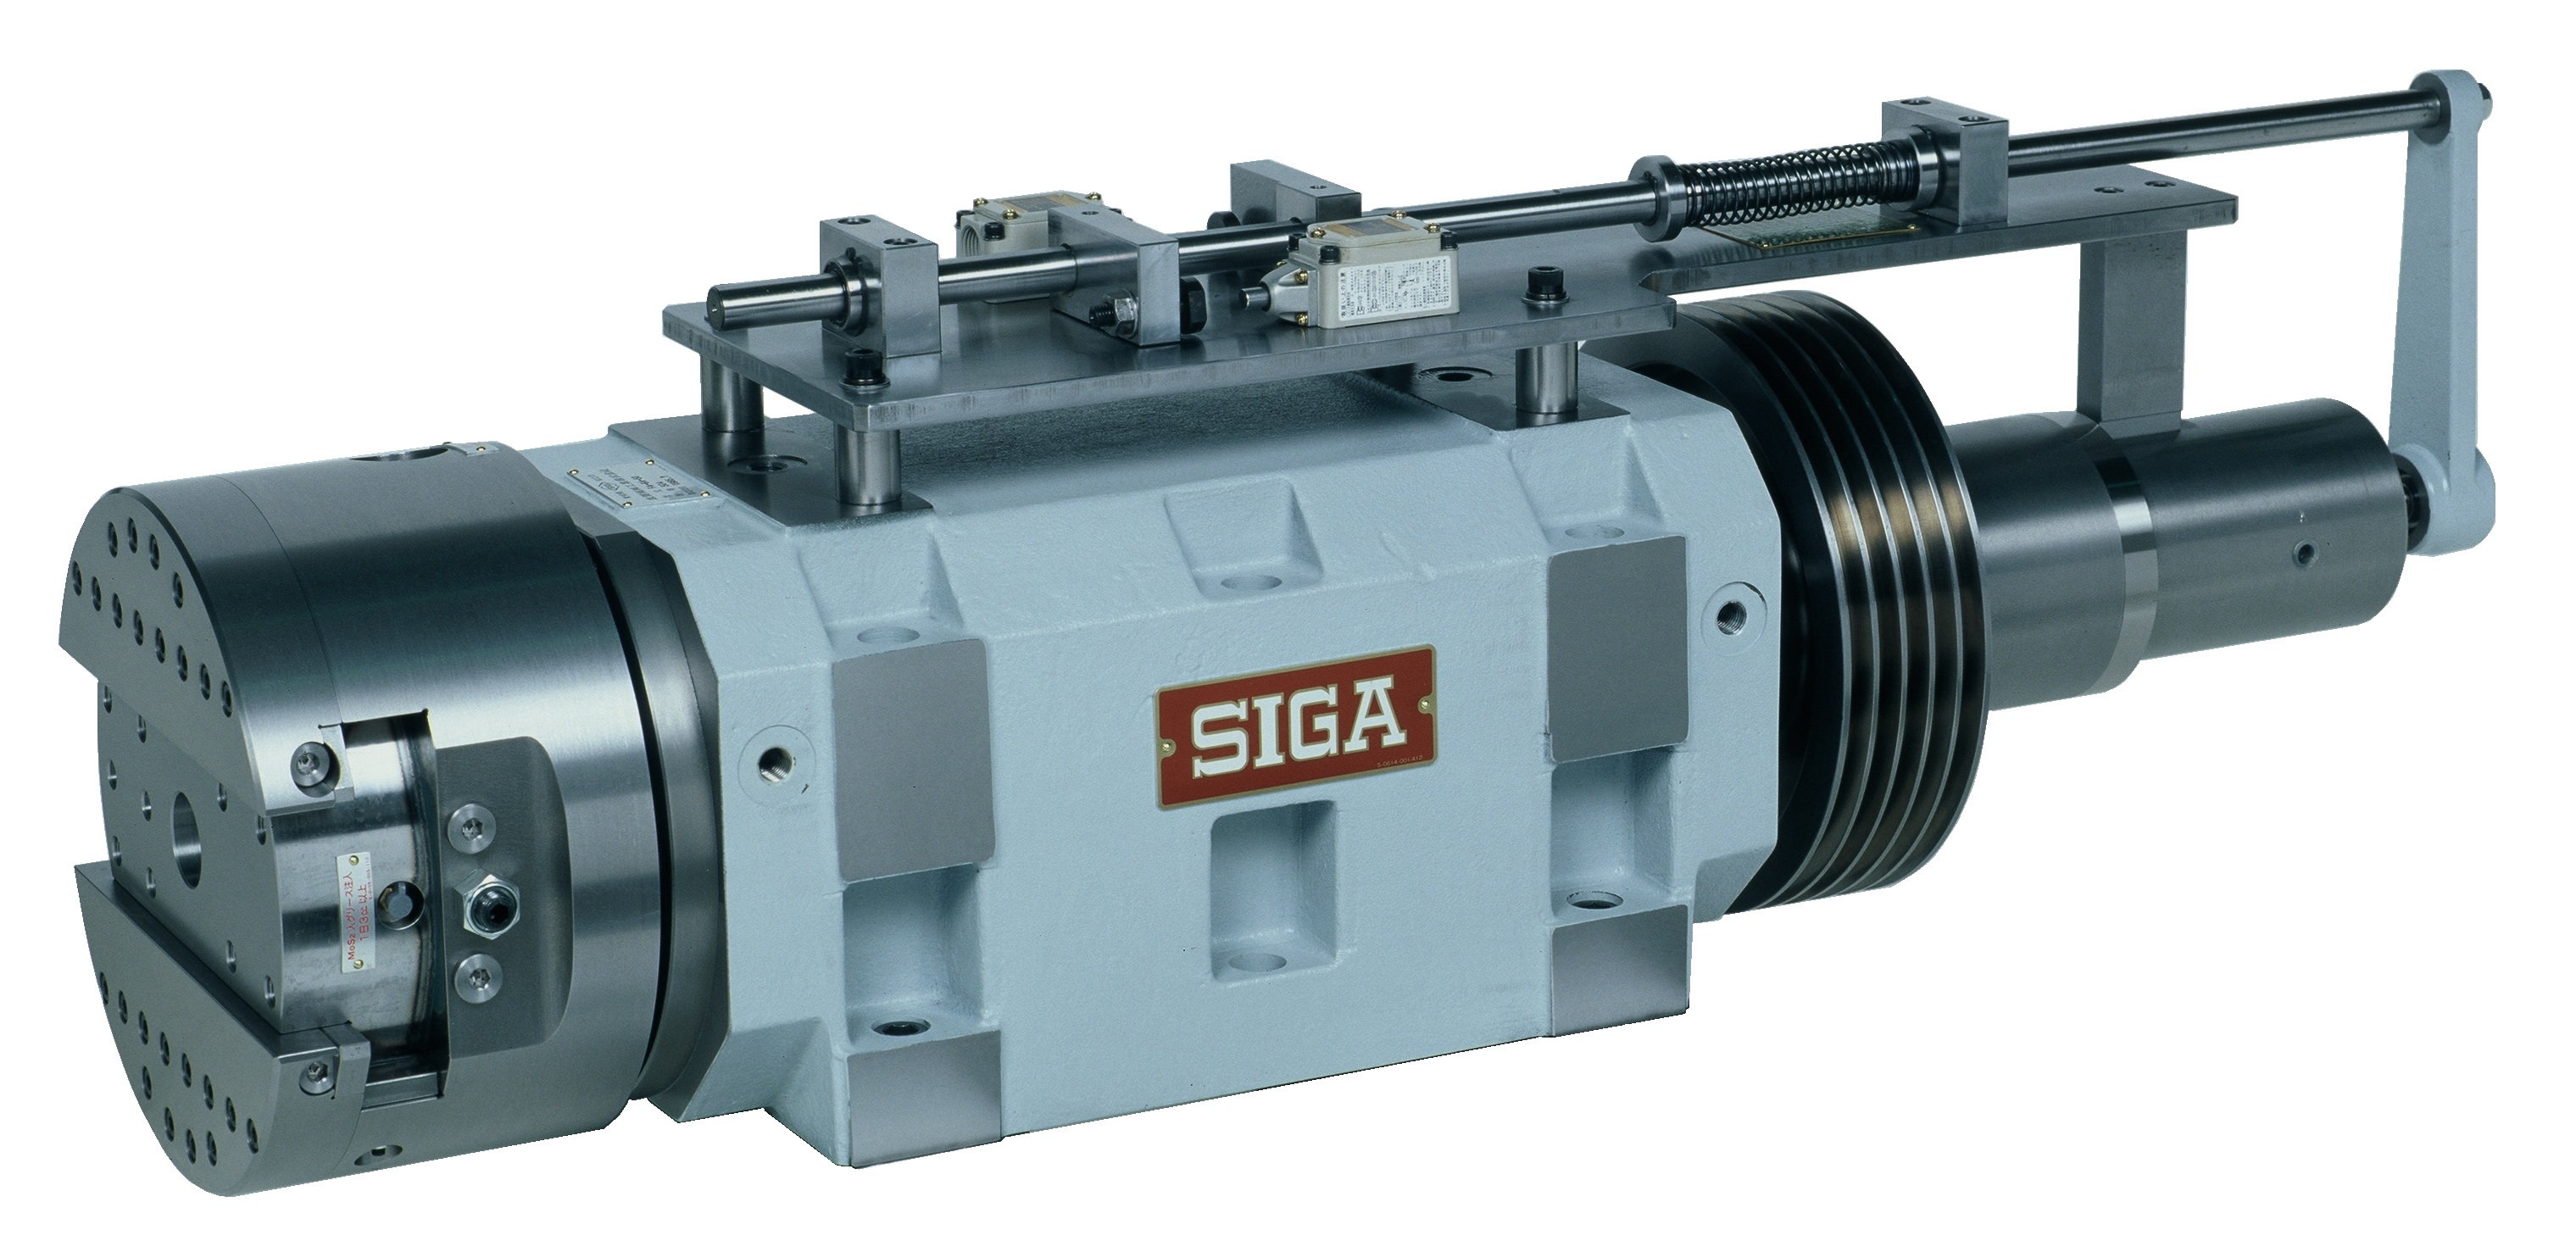 SIGA Machinery Industry spindle unit FA-6